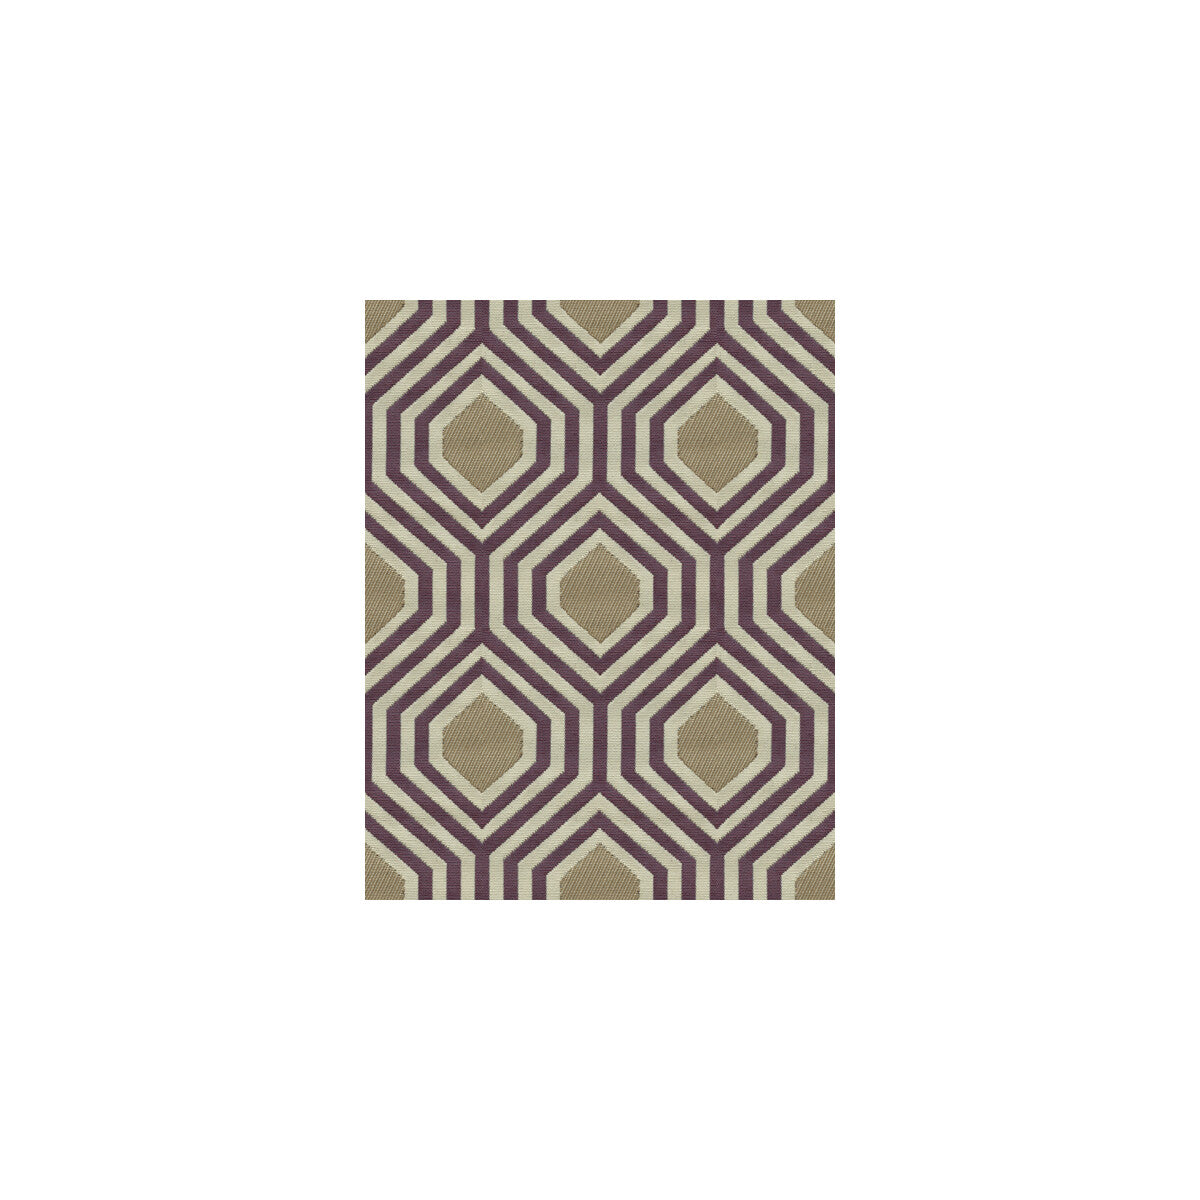 Galvani fabric in raisin color - pattern 31496.1610.0 - by Kravet Design